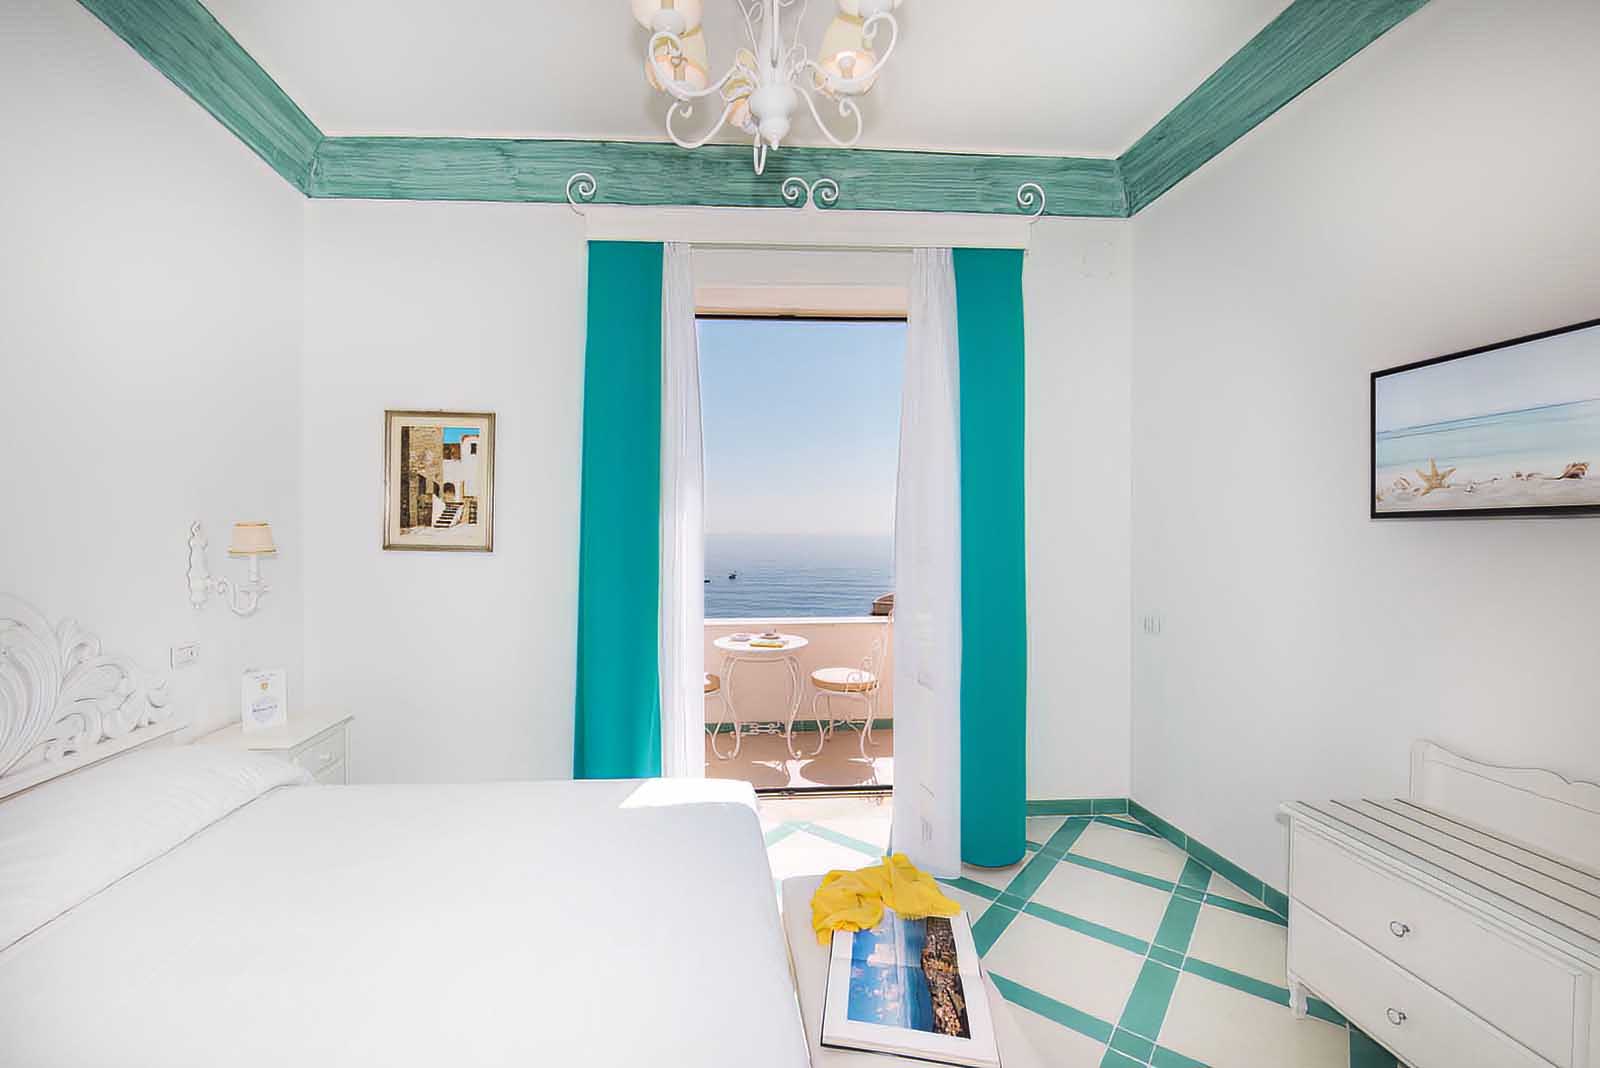 Beautiful rooms at Villa Flavio Gioia in Positano Italy